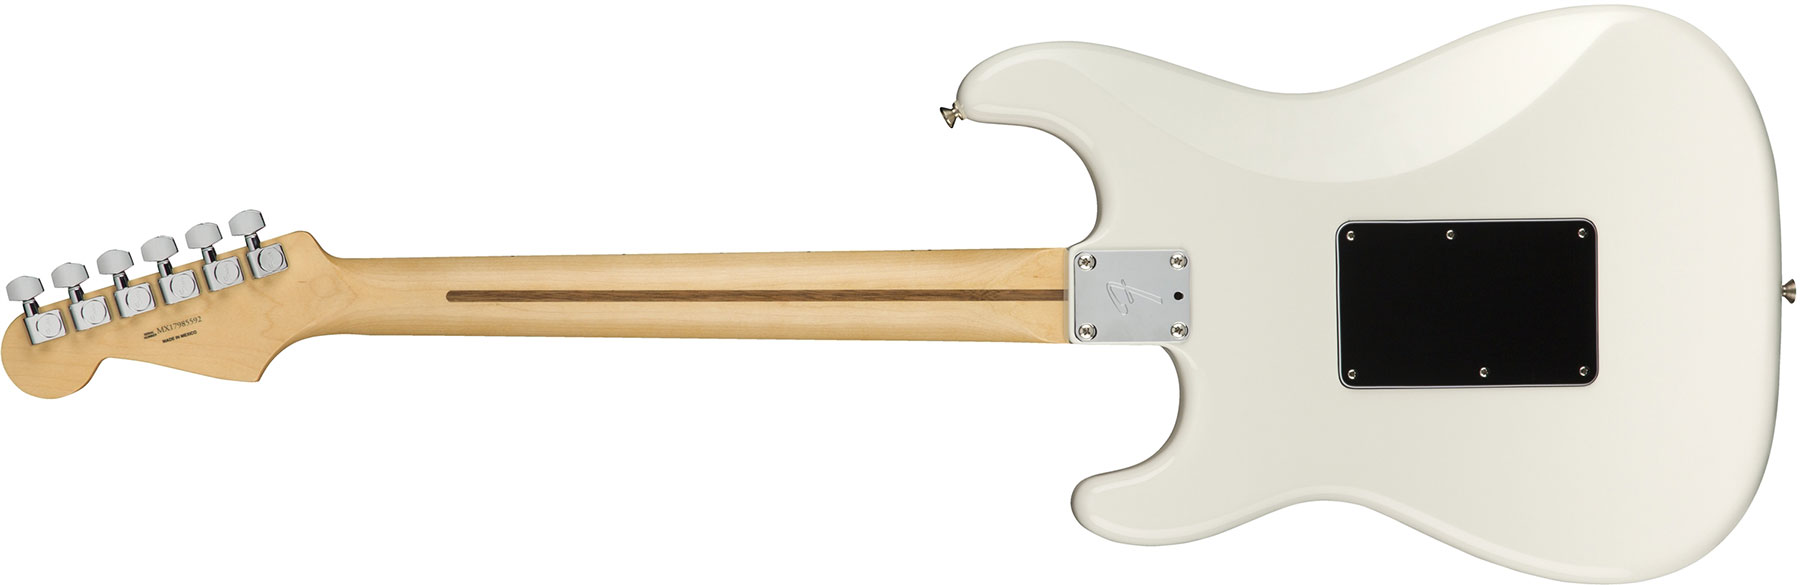 Fender Strat Player Floyd Rose Mex Hss Fr Mn - Polar White - Str shape electric guitar - Variation 1